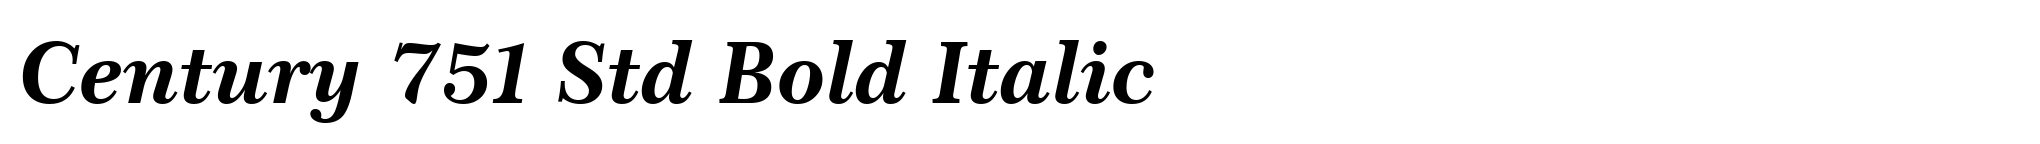 Century 751 Std Bold Italic image